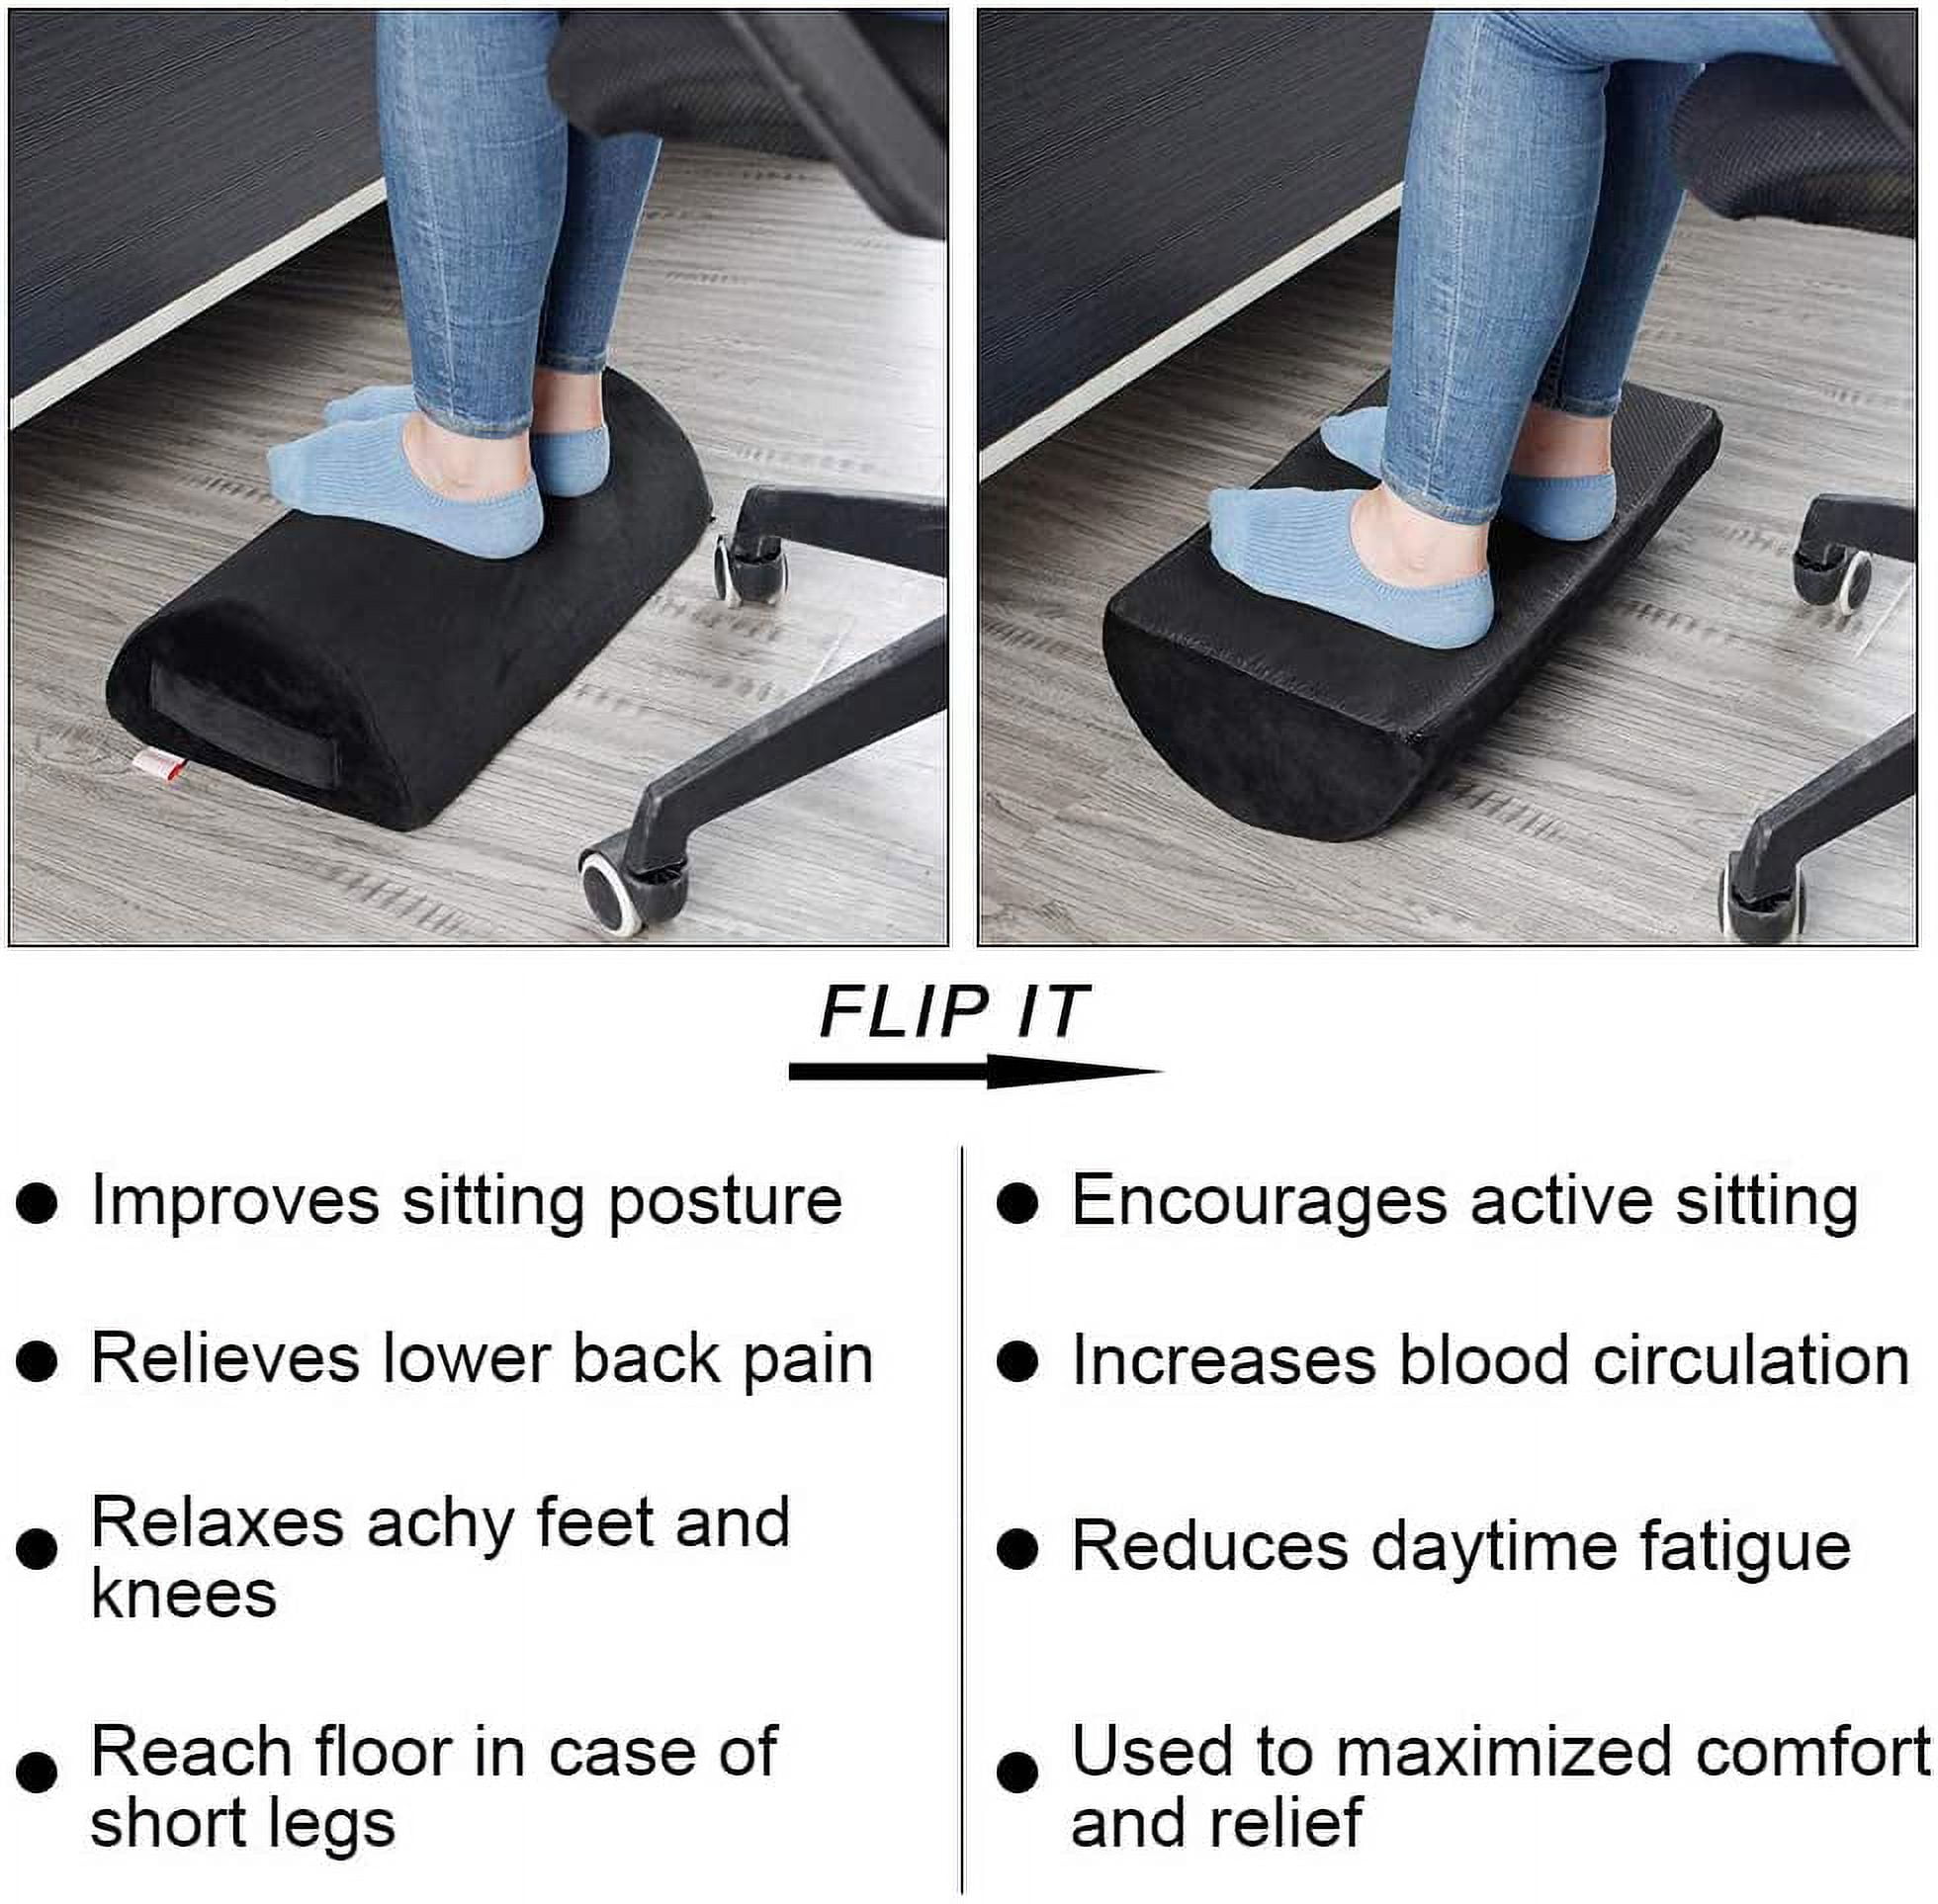 Balance 1 Ergonomic Office Footrest for Sitting Posture Correction